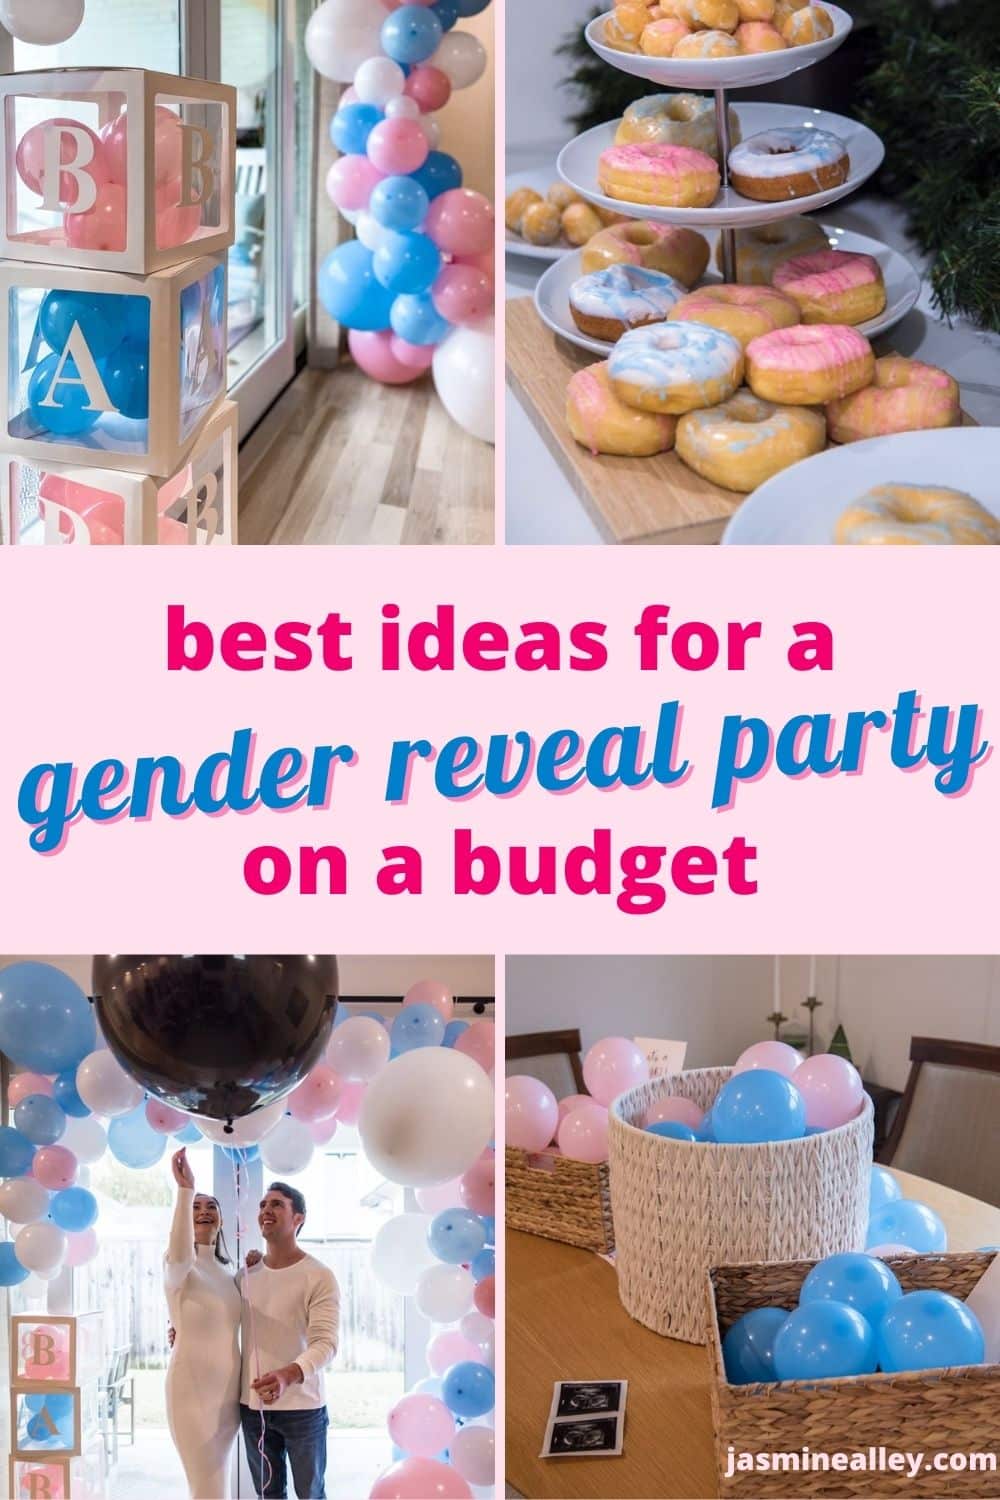 https://www.jasminealley.com/wp-content/uploads/2021/12/Gender-Reveal-Party-Budget-Ideas.jpg